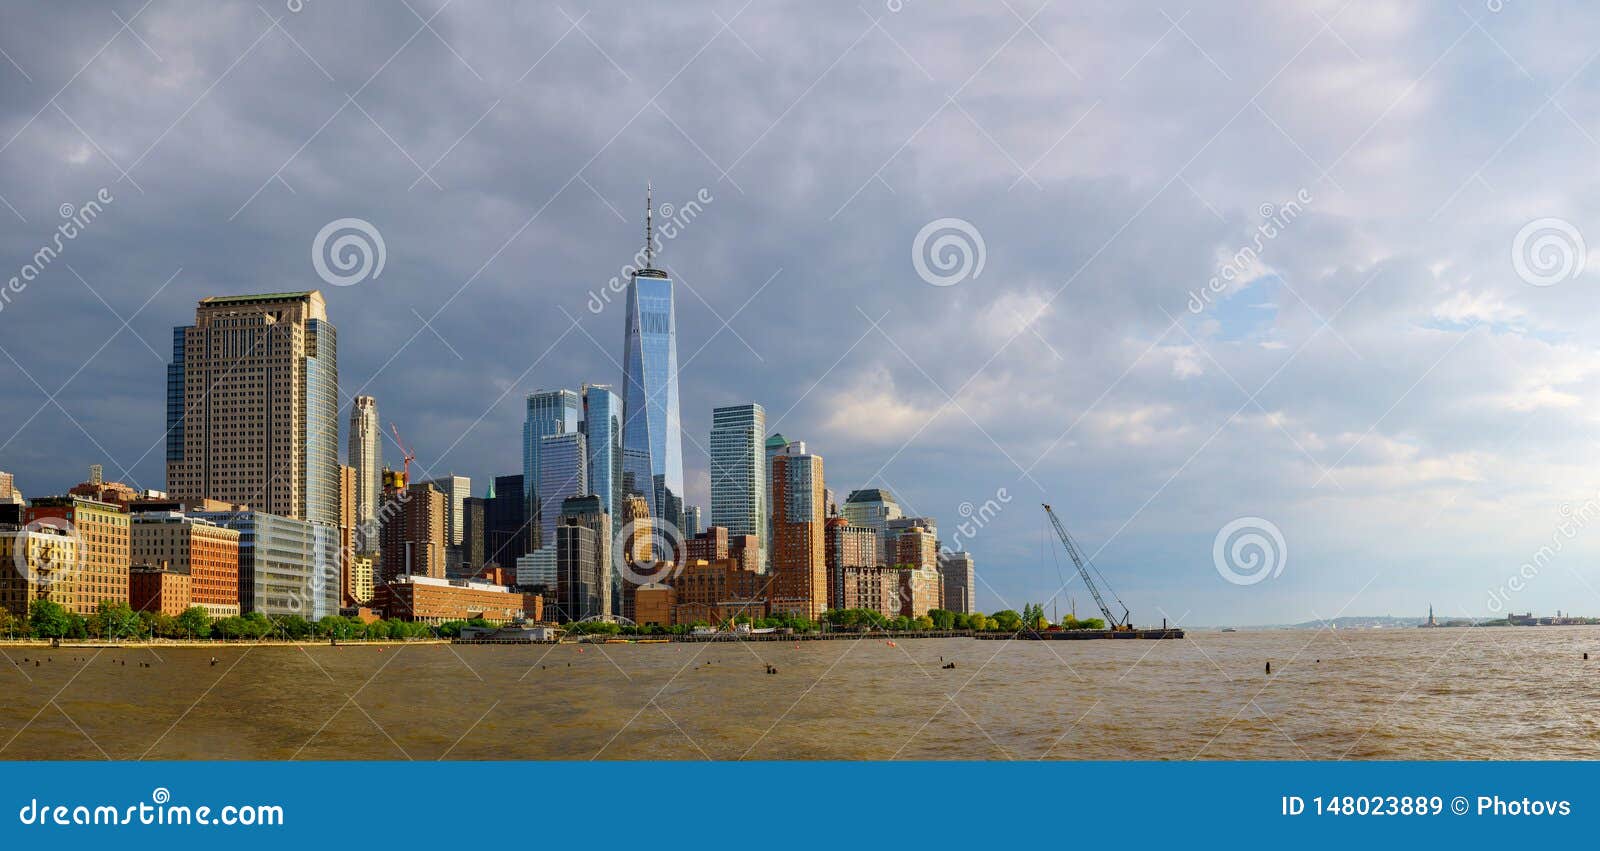 lower manhattan skyscrapers and one world trade center, new york city